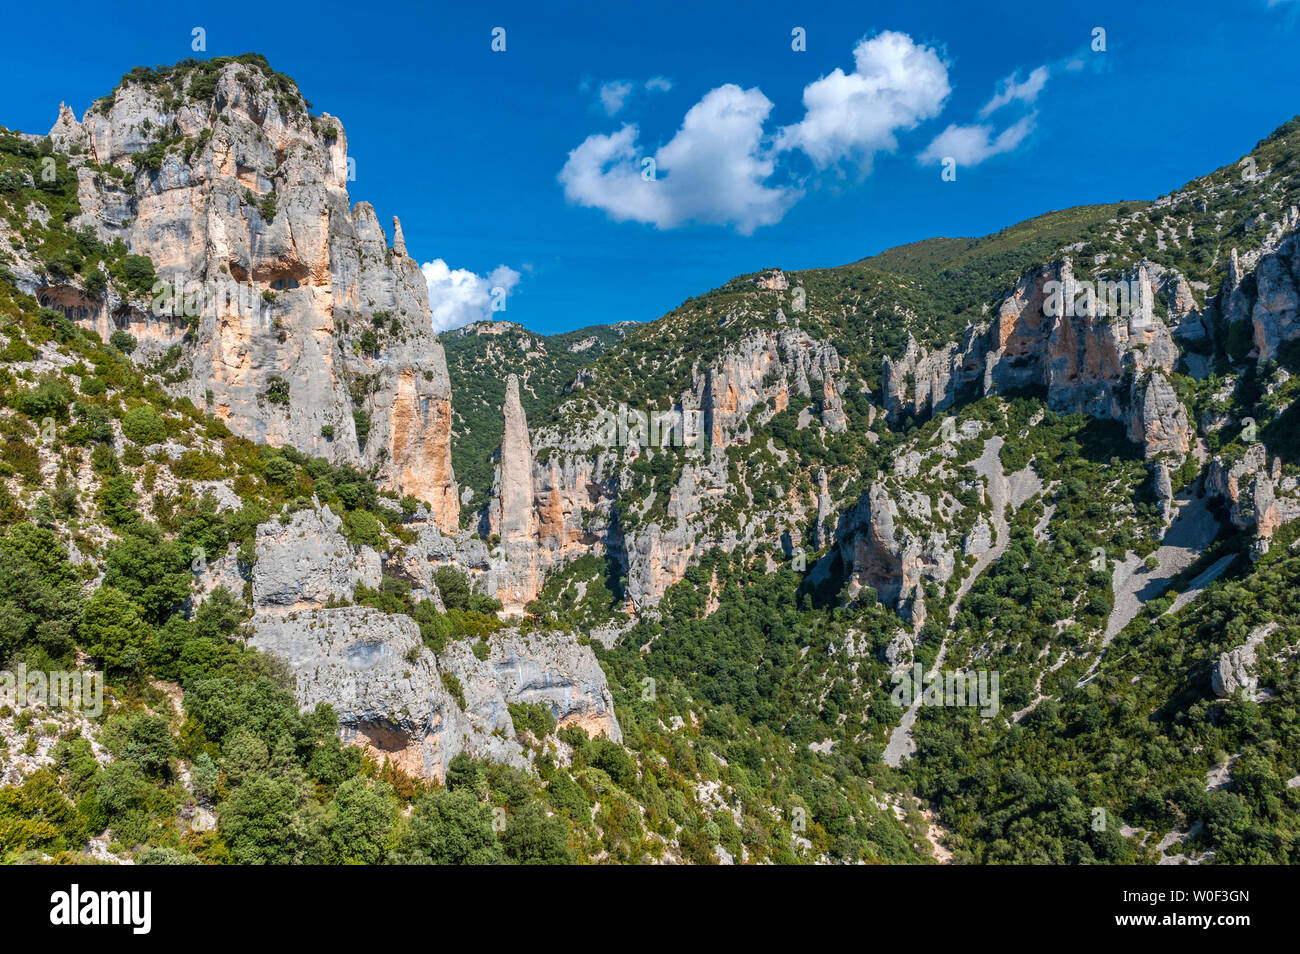 Spain, province of Huesca, autonomous community of Aragon, Sierra y Cañones de Guara natural park, the Mascun canyon Stock Photo